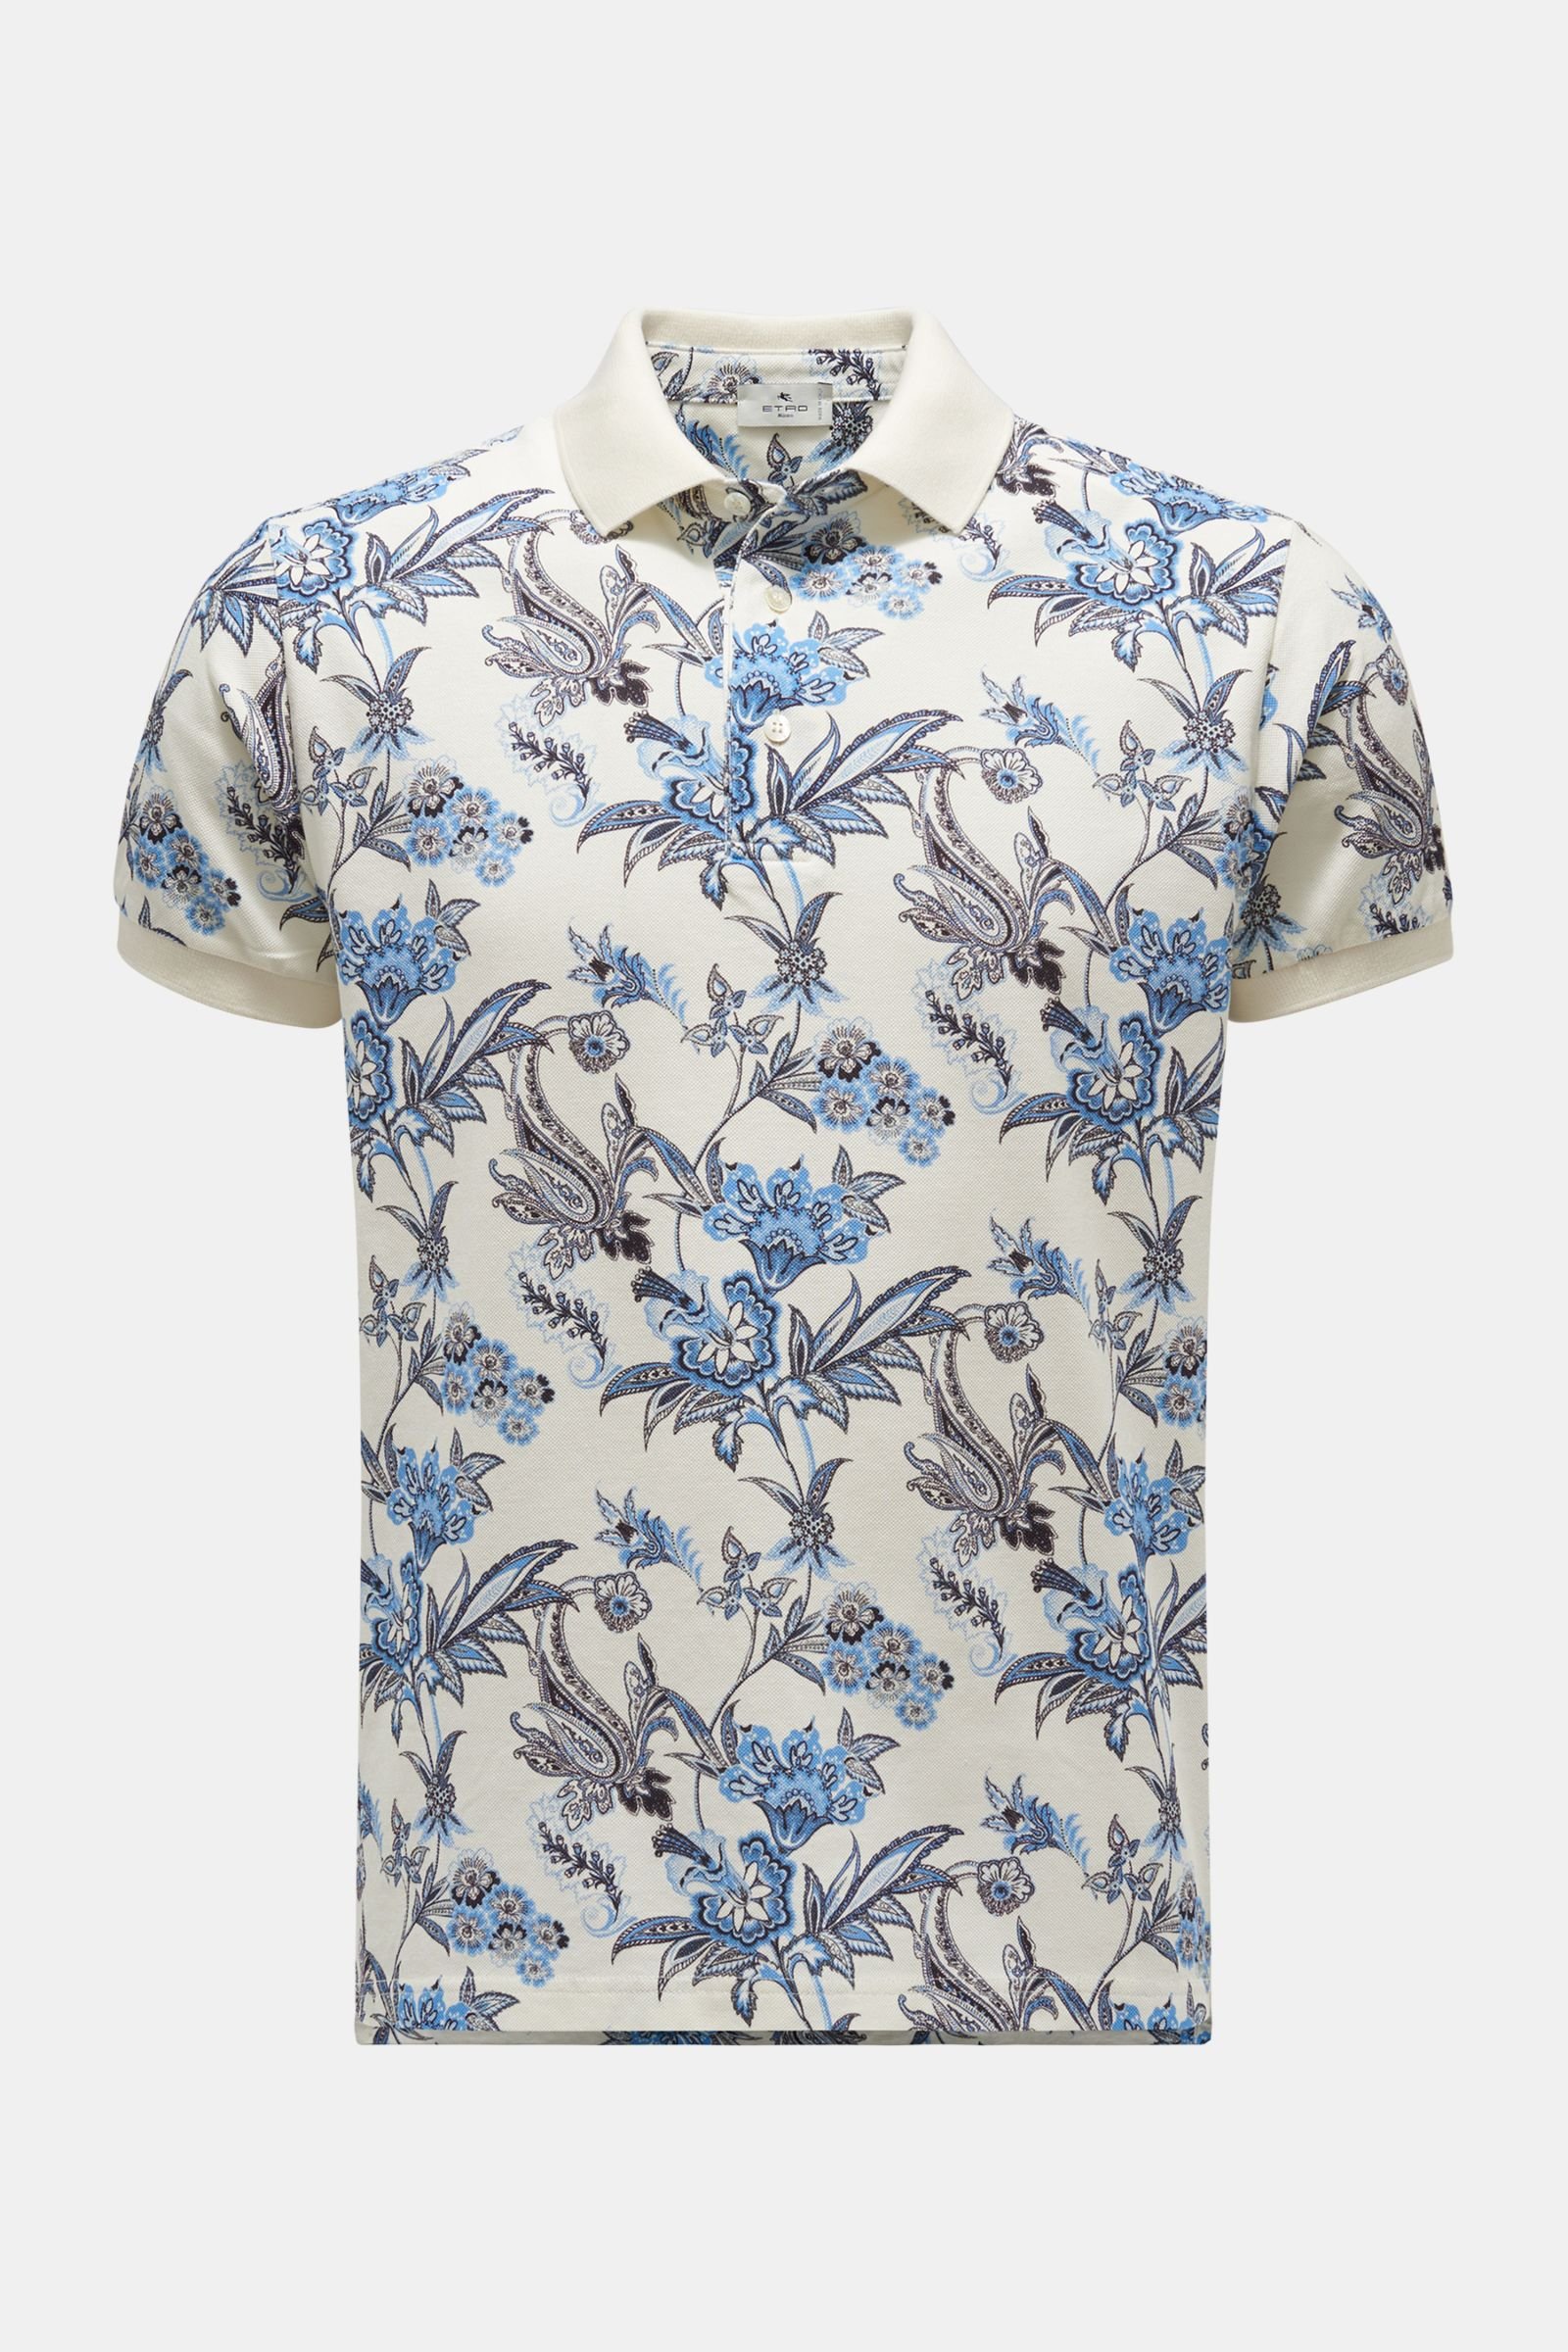 Polo shirt white/light blue patterned